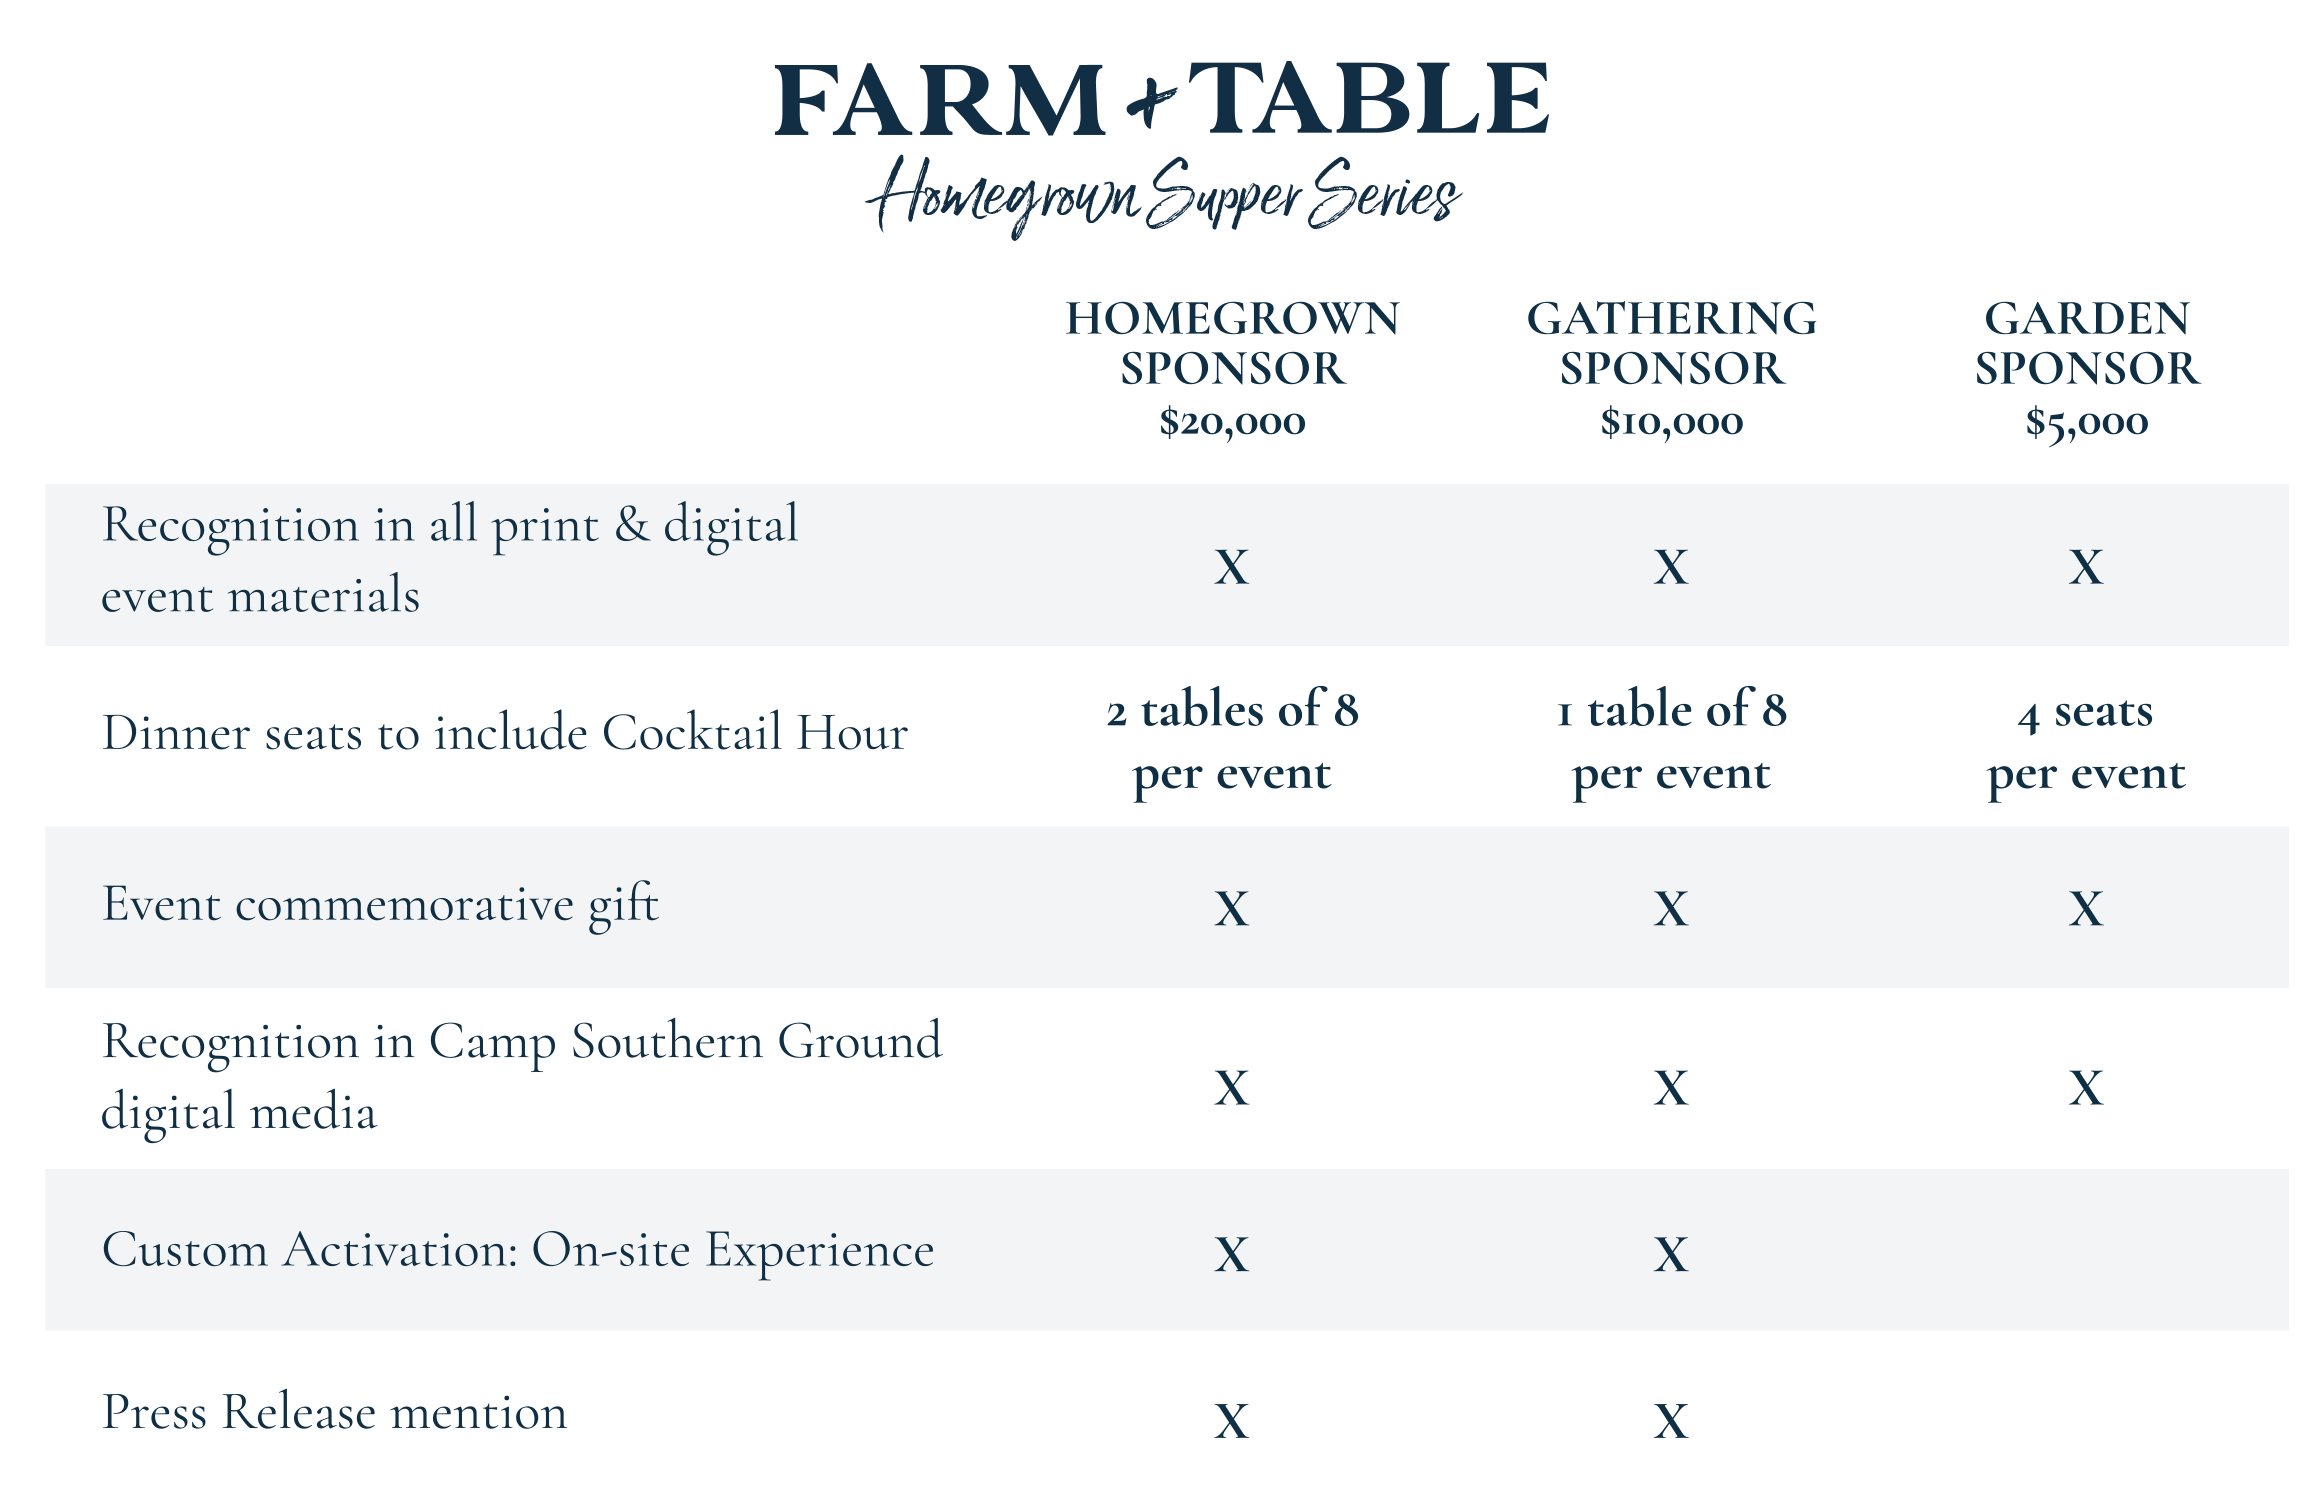 Farm + Table Sponsor Benefits